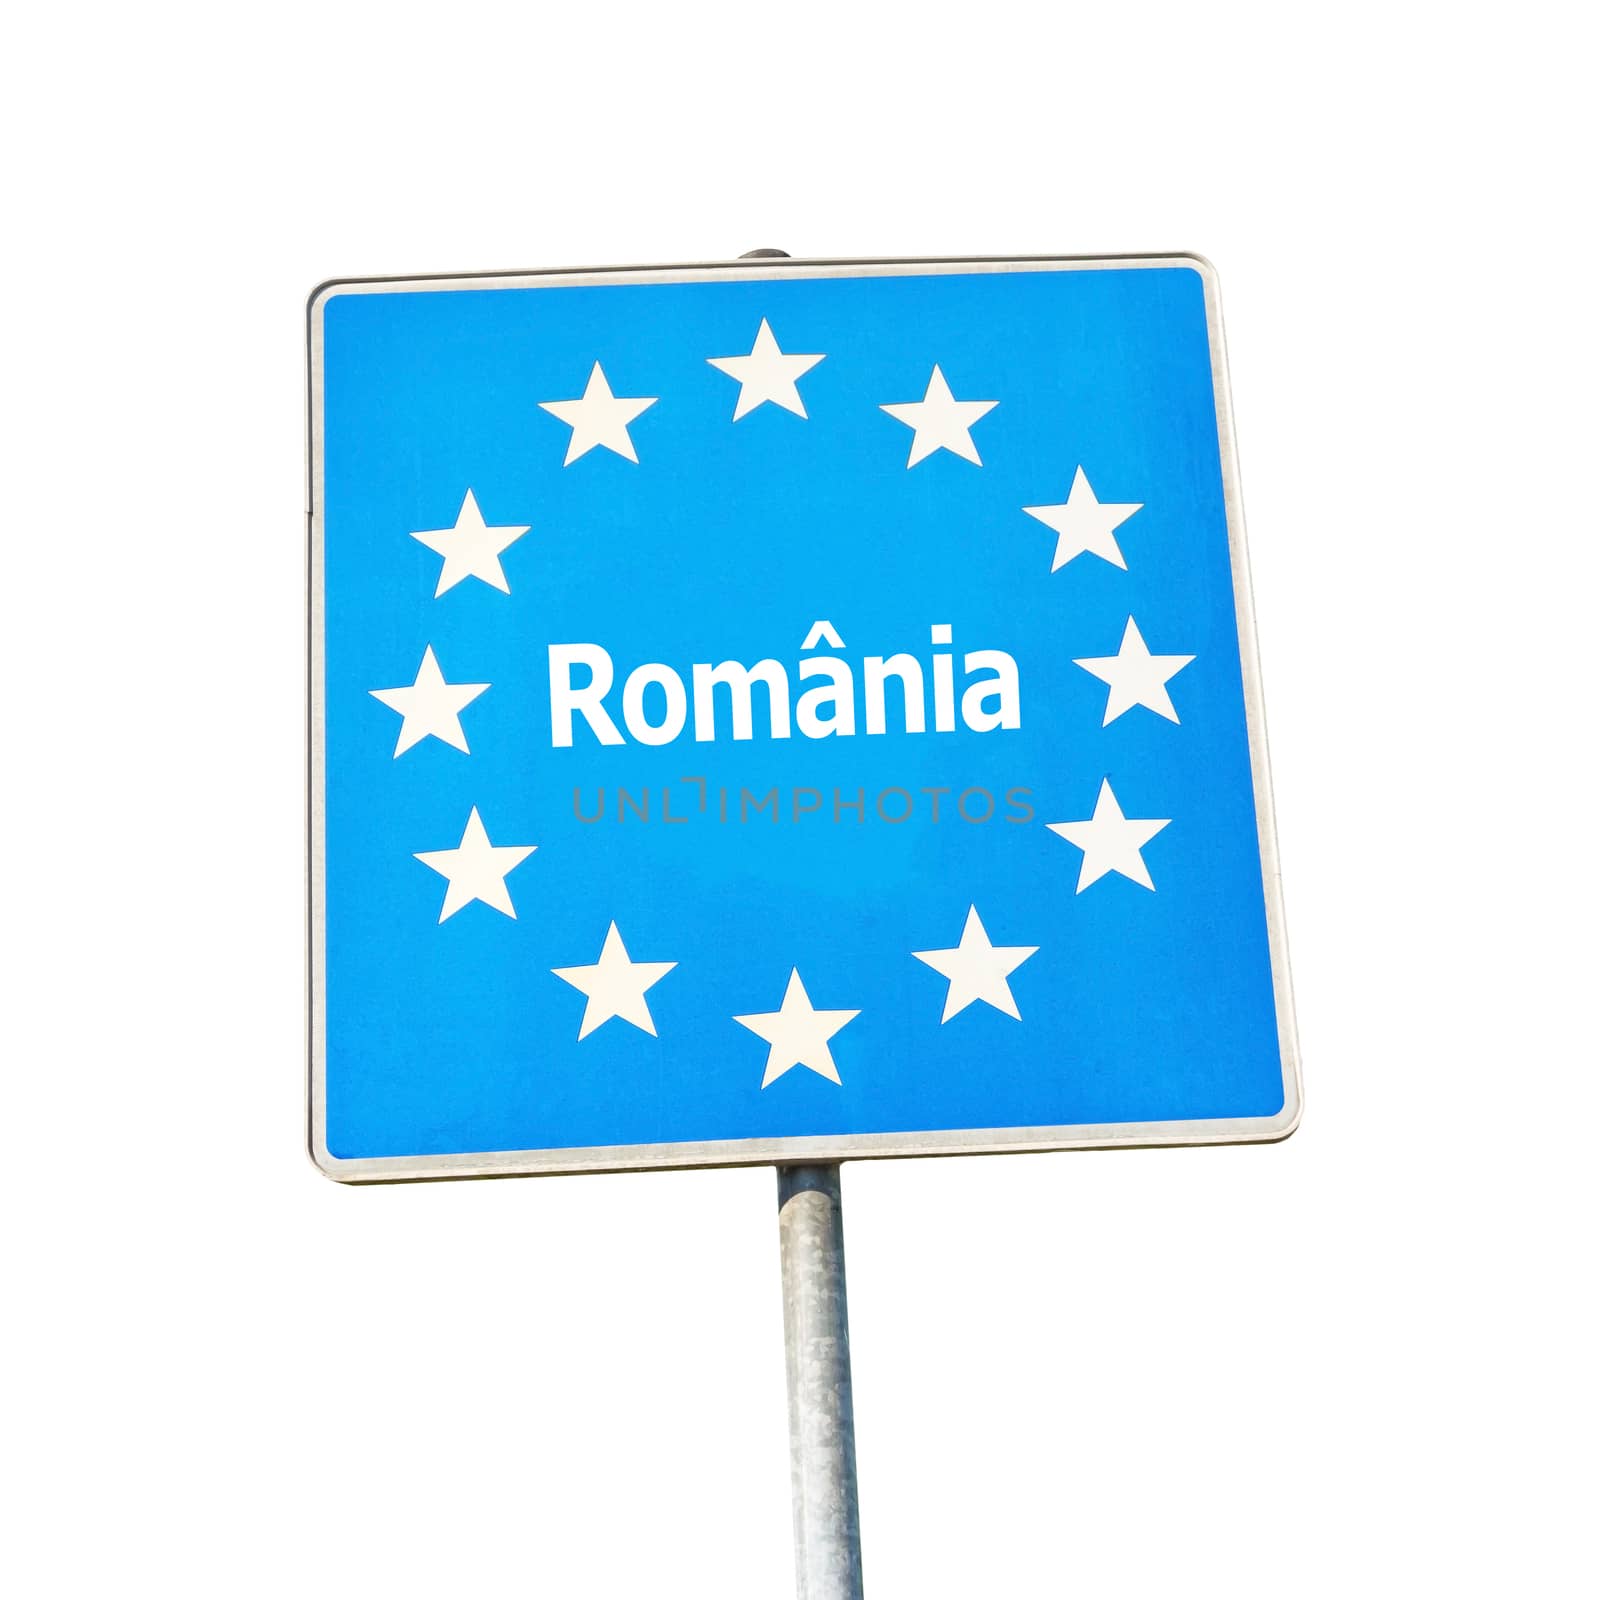 Border sign of romania, europe - isolated on white background